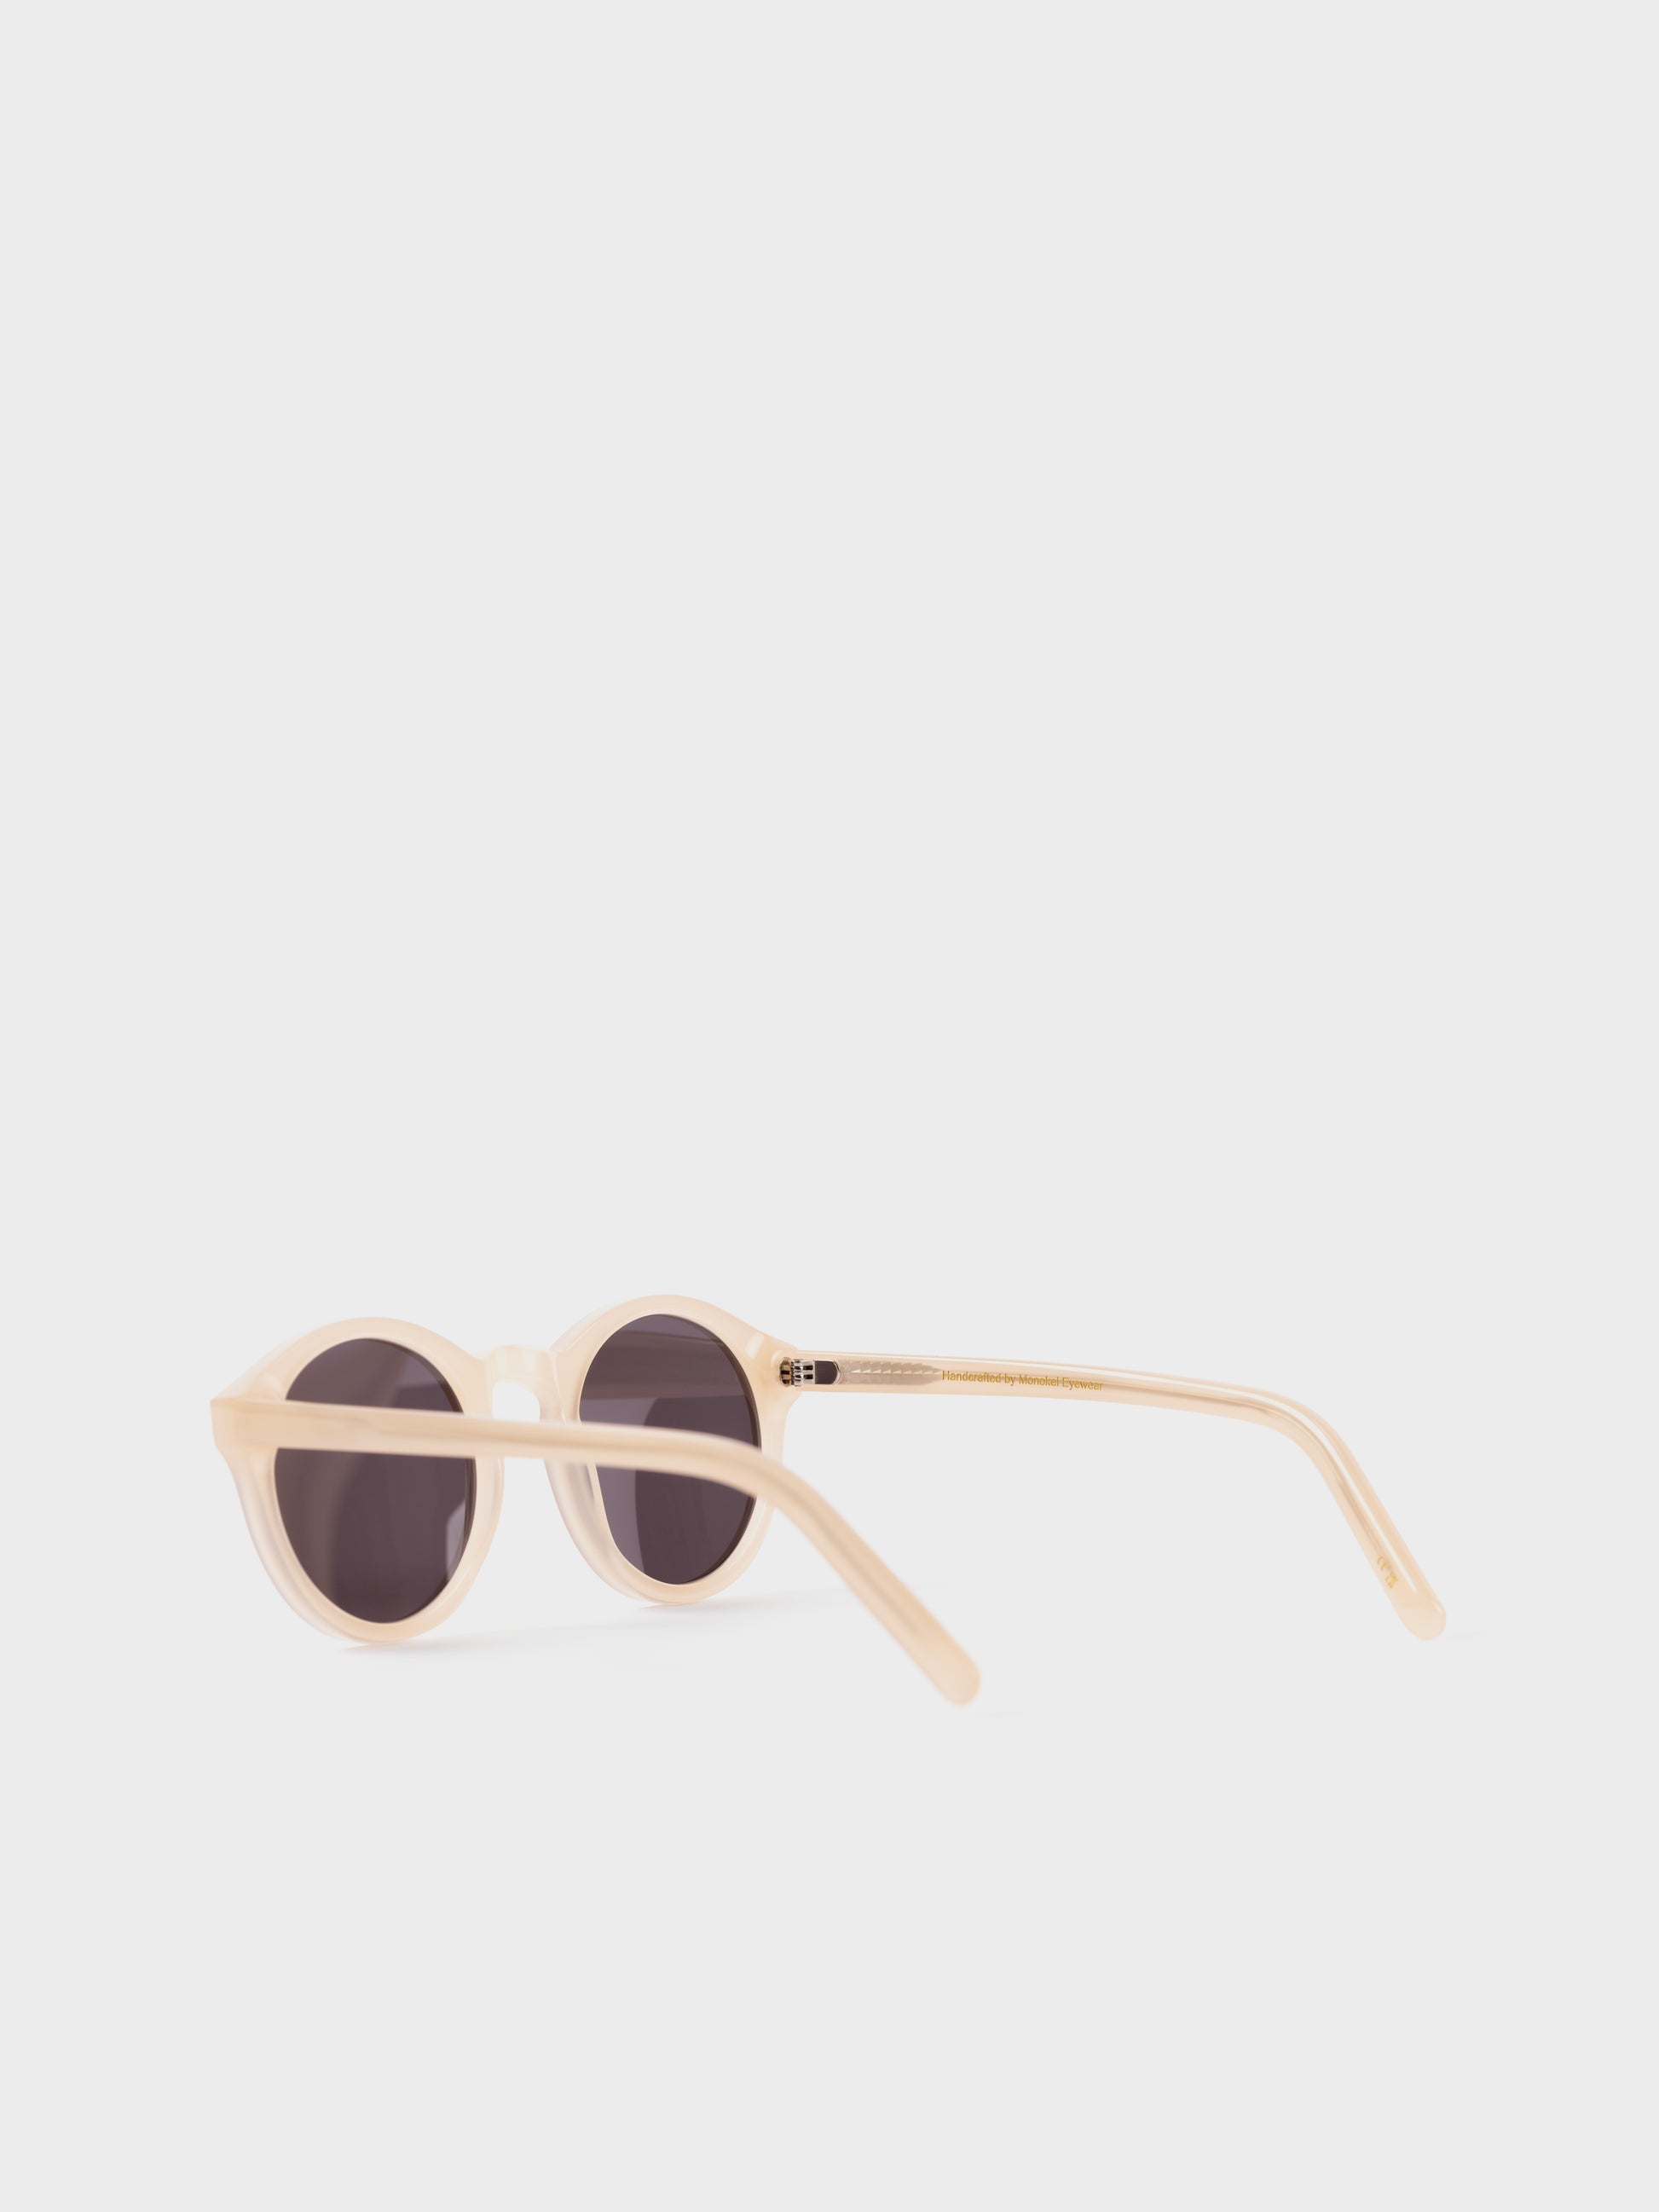 Monokel Sunglasses - Barstow Sand/Grey Lens